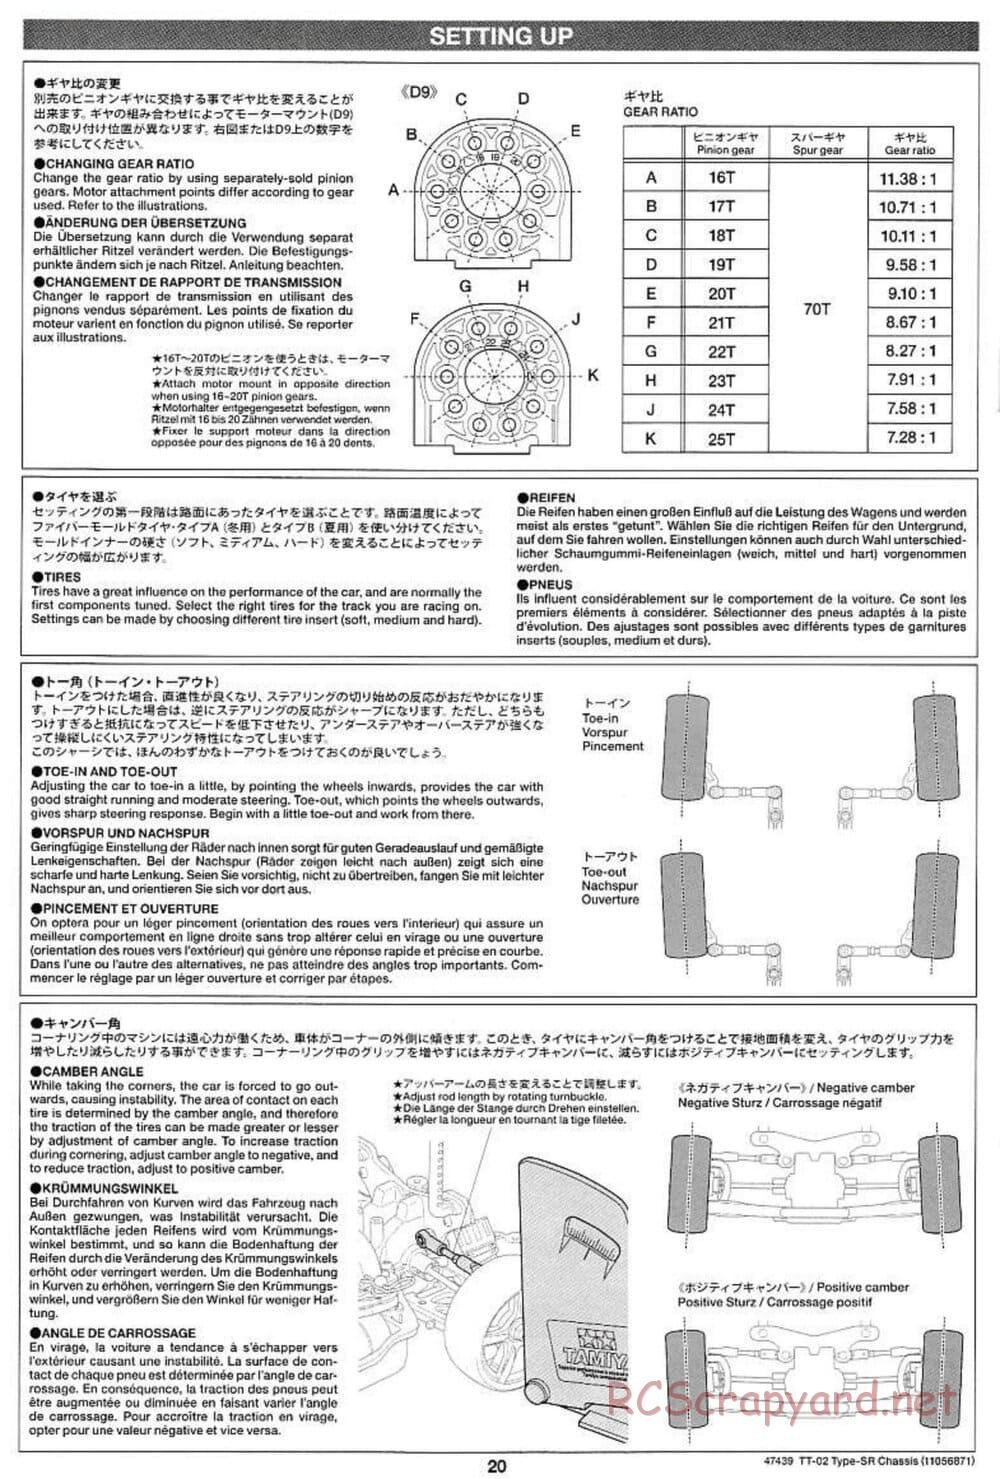 Tamiya - TT-02 Type-SR Chassis - Manual - Page 20